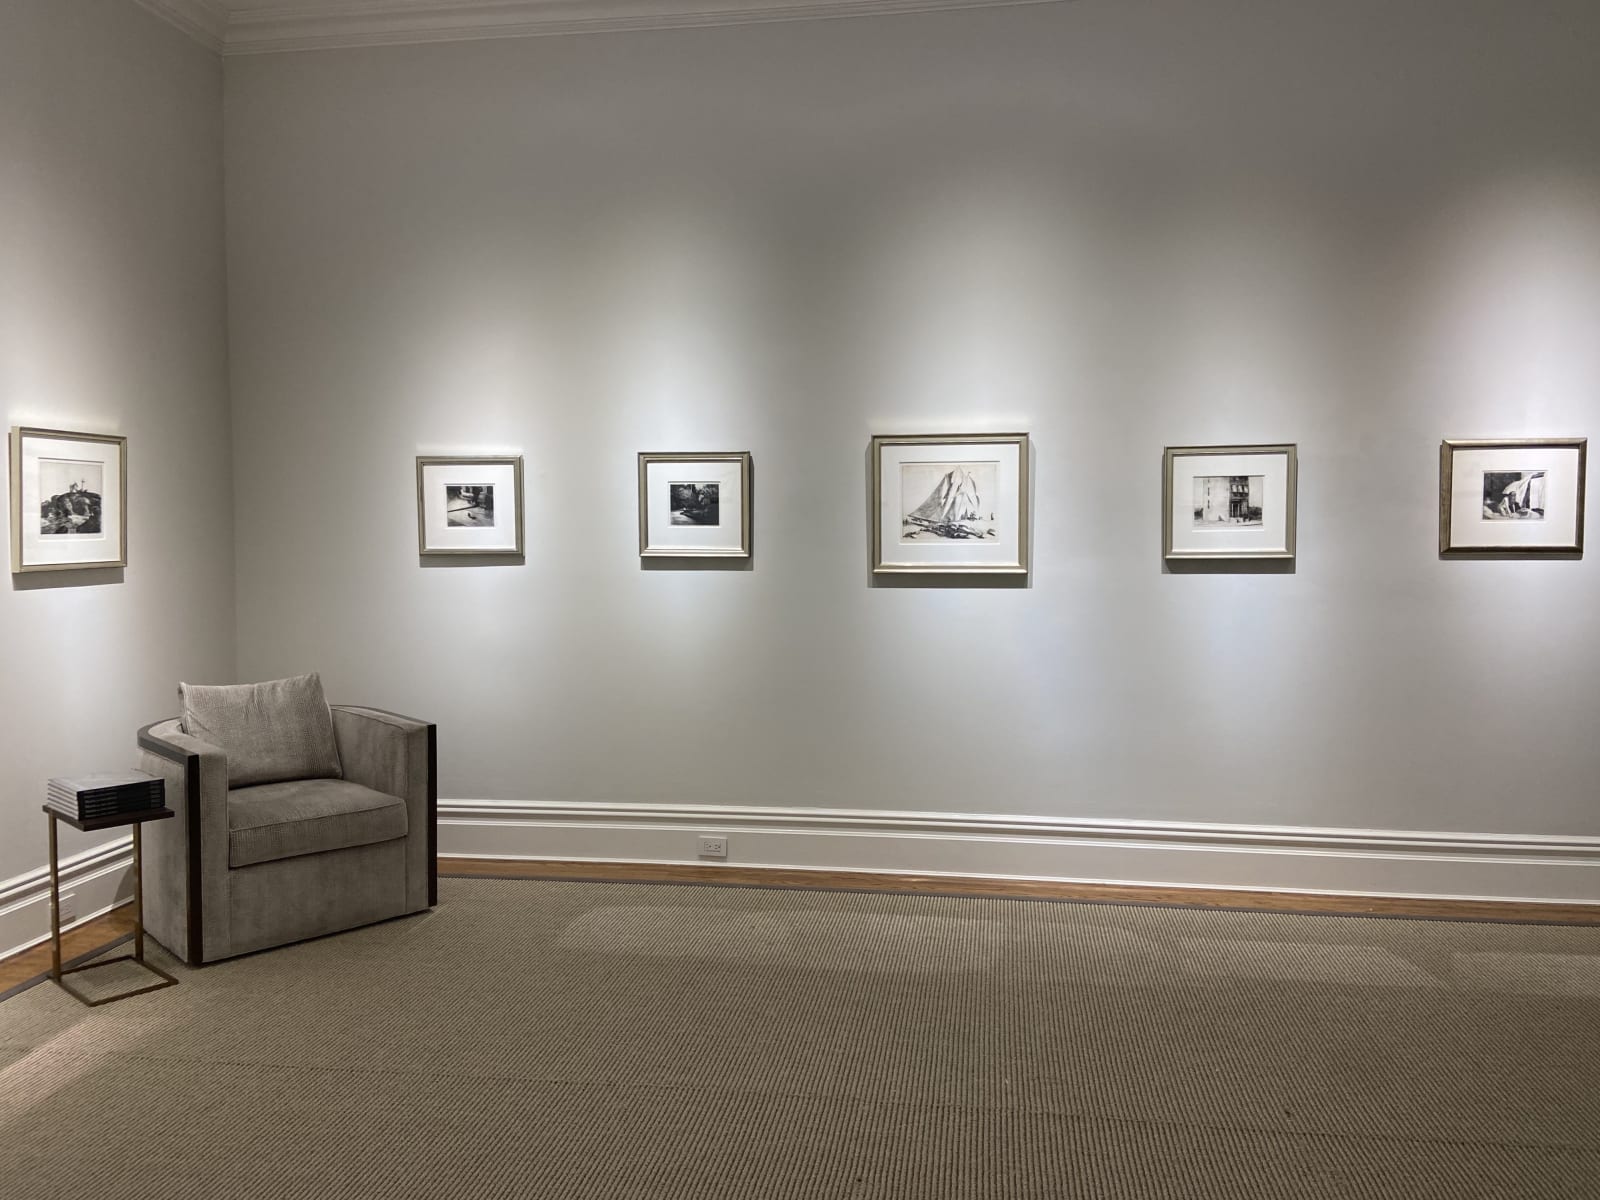 Edward Hopper: Works on Paper